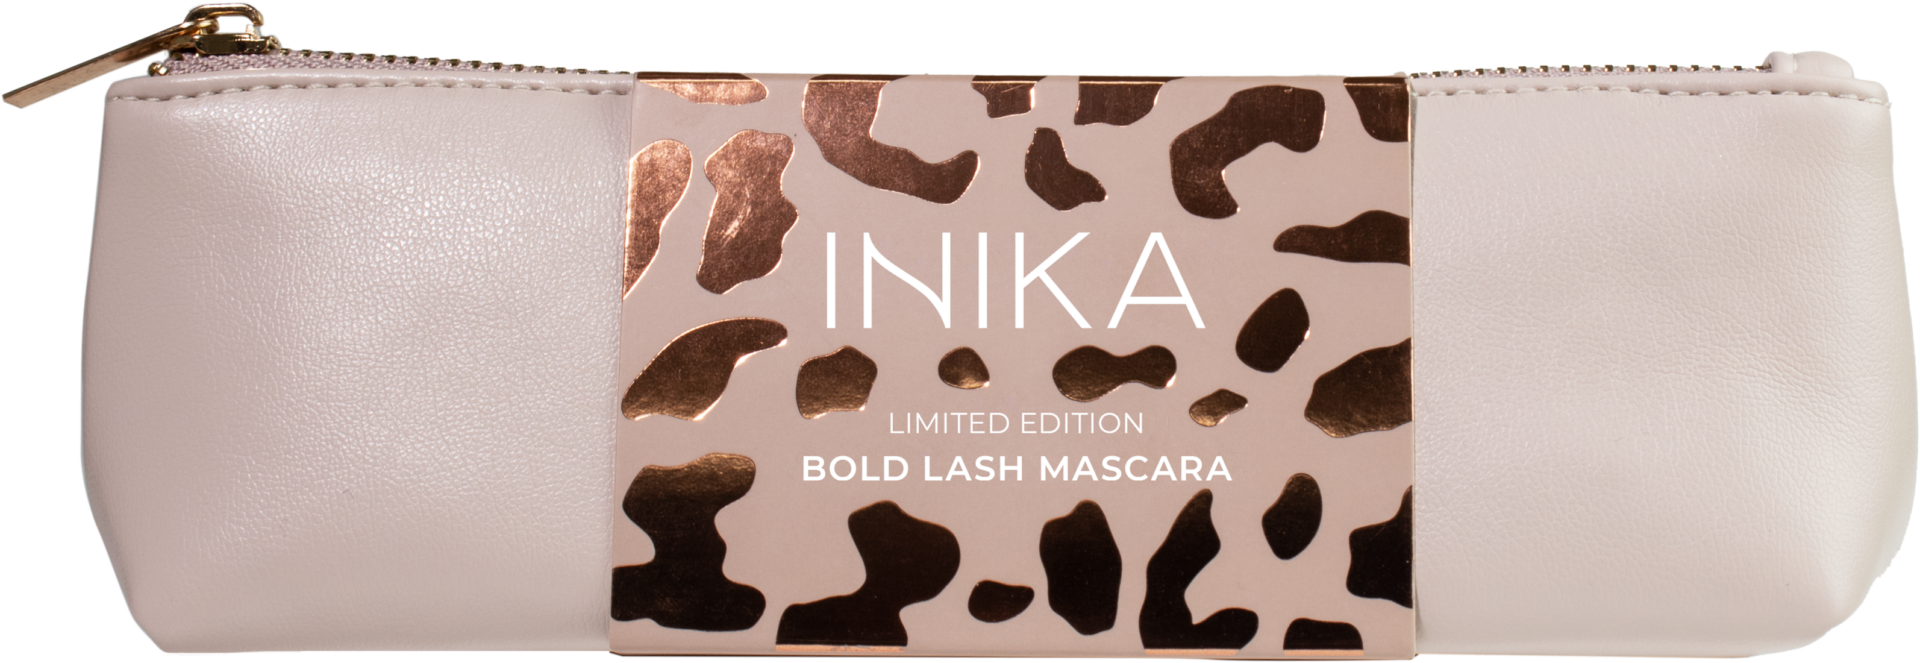 INIKA Limited Edition Bold Lash Mascara